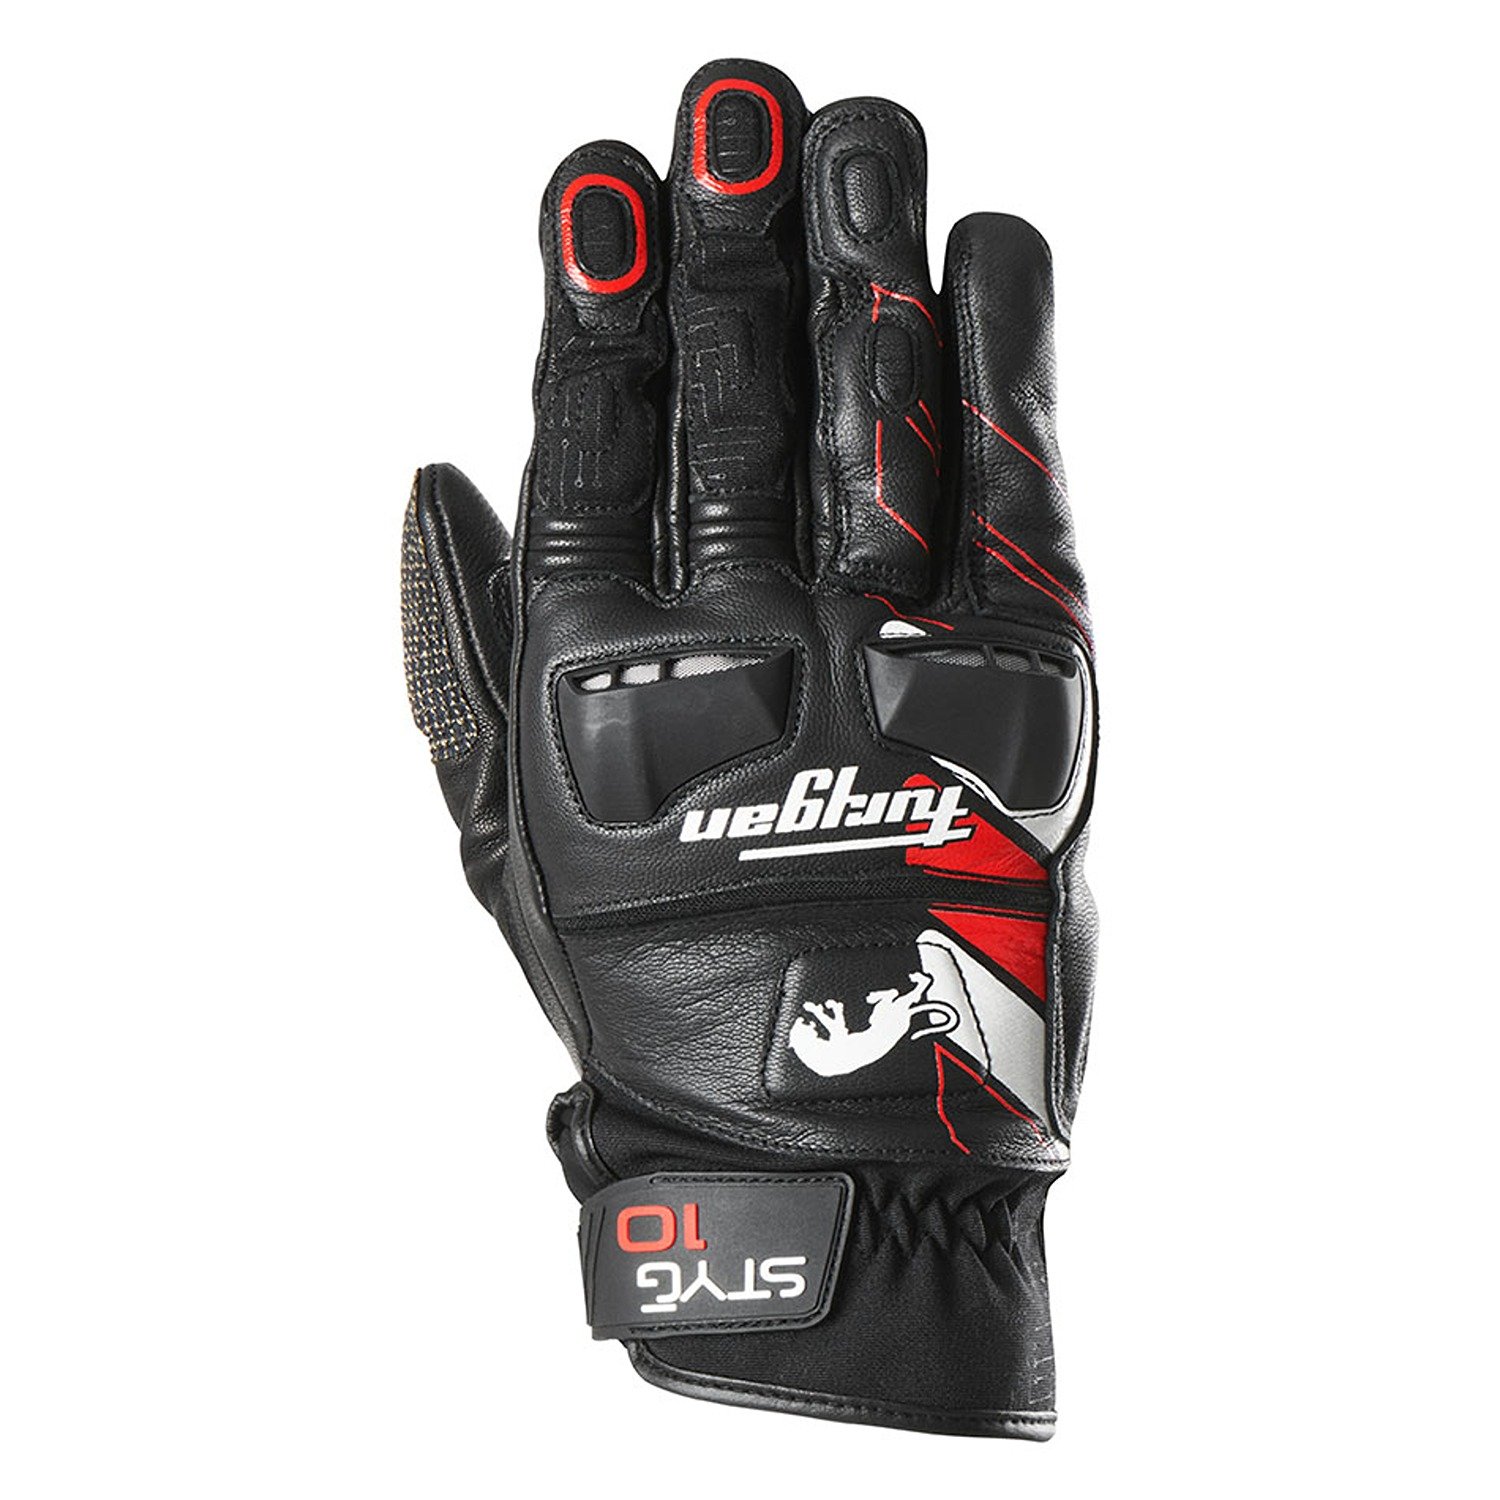 Image of Furygan Styg10 Gloves Black White Red Size M ID 3435980385033